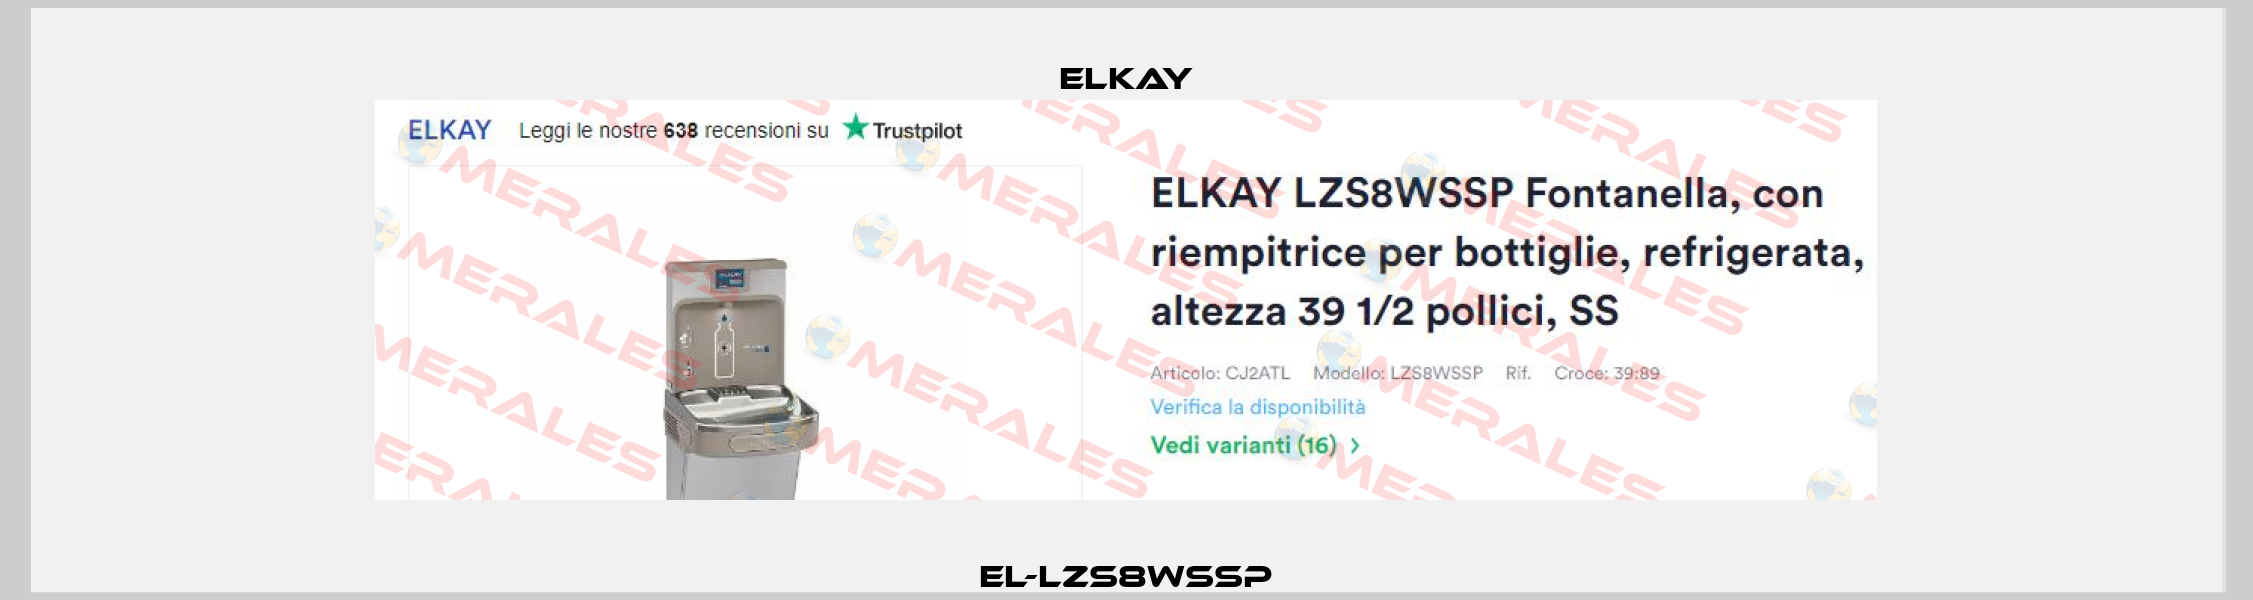 EL-LZS8WSSP Elkay